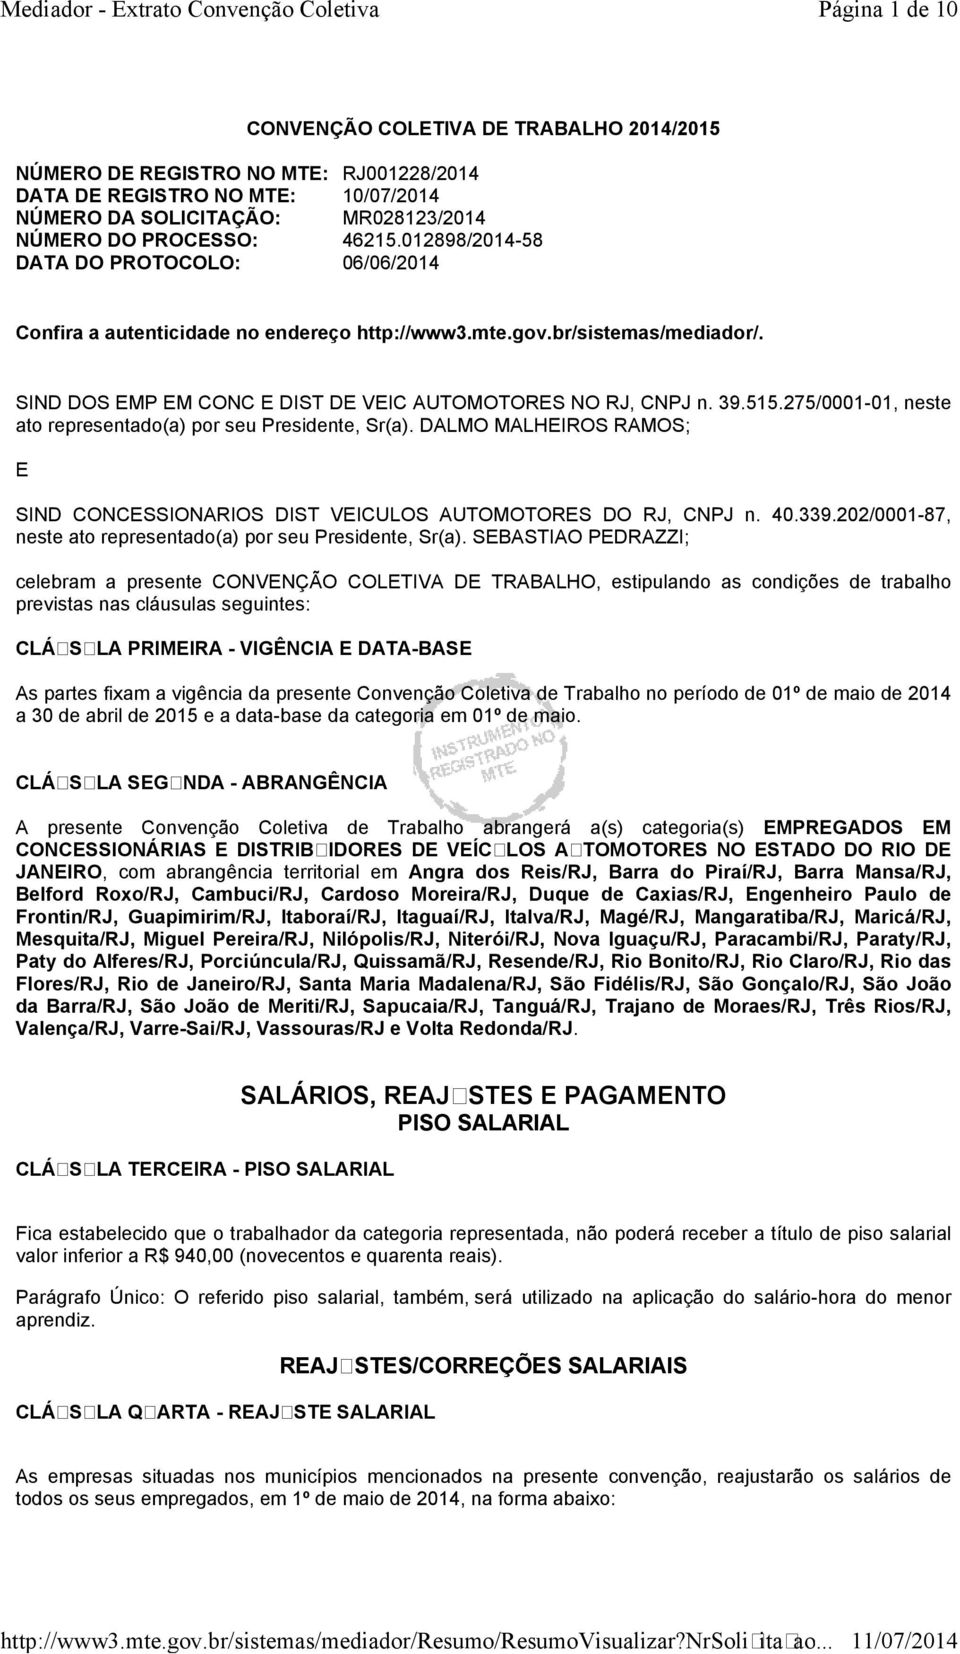 275/0001-01, neste ato representado(a) por seu Presidente, Sr(a). DALMO MALHEIROS RAMOS; E SIND CONCESSIONARIOS DIST VEICULOS AUTOMOTORES DO RJ, CNPJ n. 40.339.